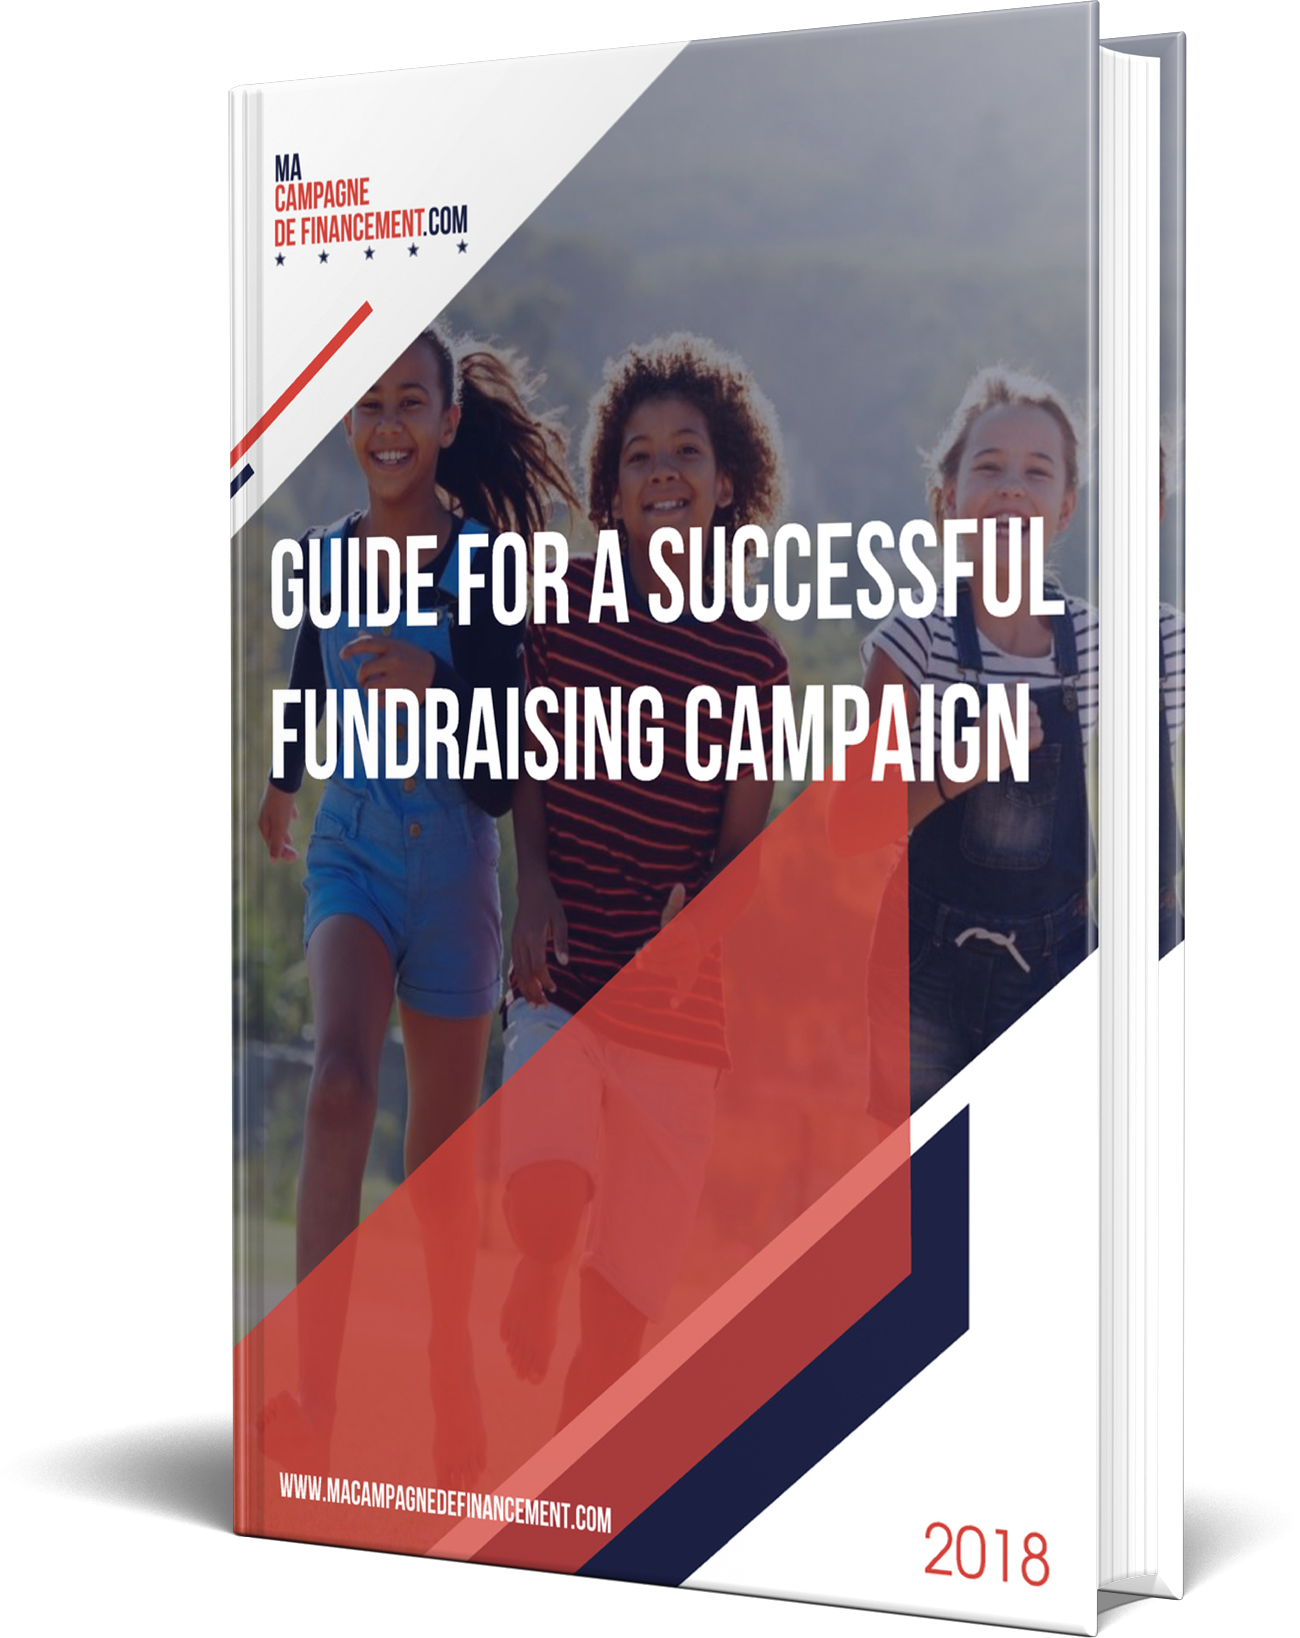 Fundraising campaign